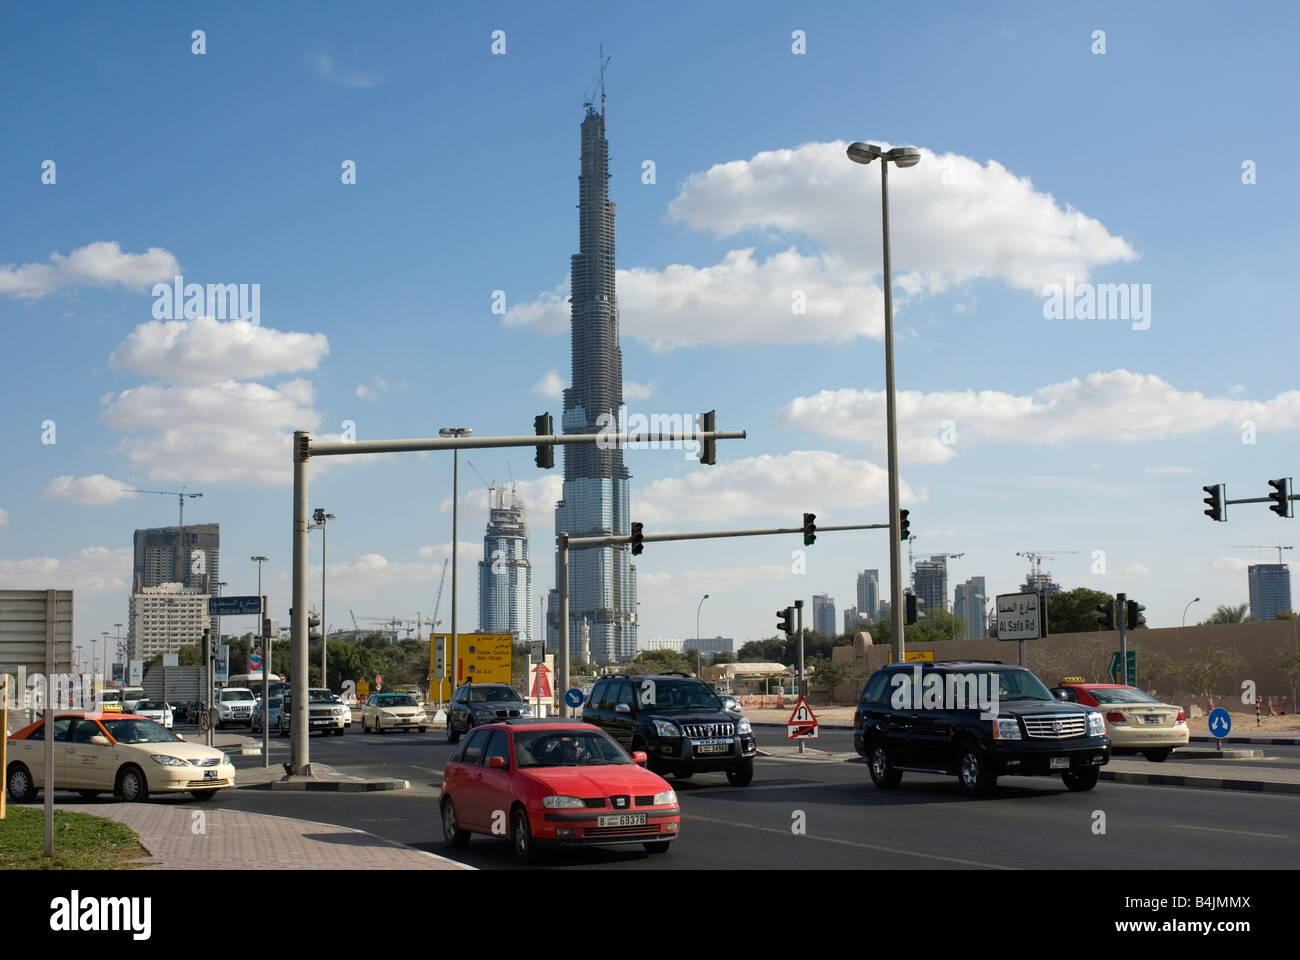 Dubai traffic Burj Dubai tallest tower in background Stock Photo